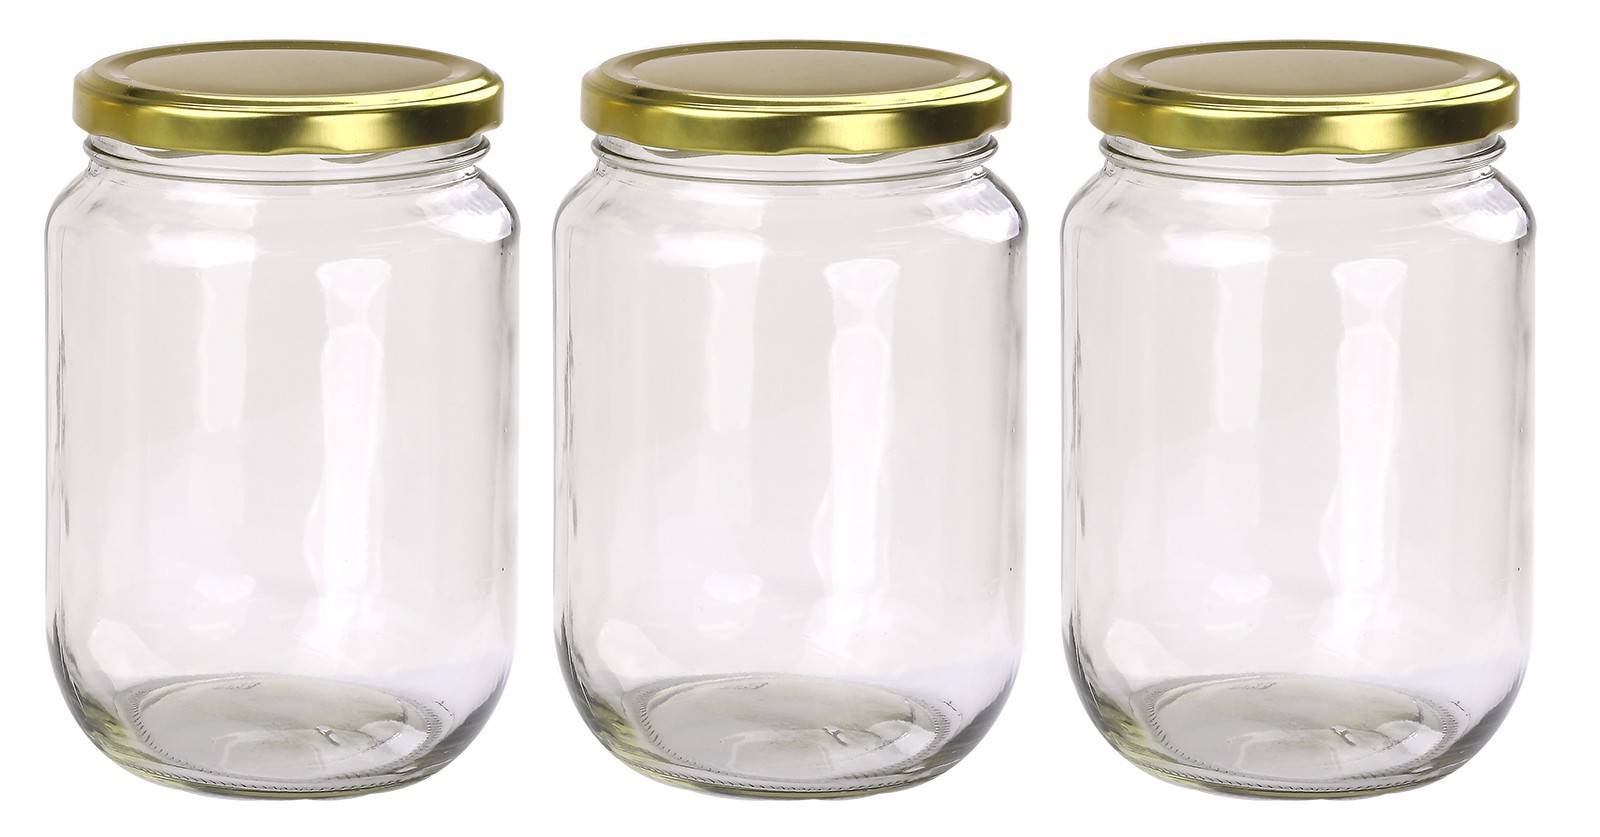 36-pcs-honey-jars-1kg-size-round-glass-jar-with-gold-lid